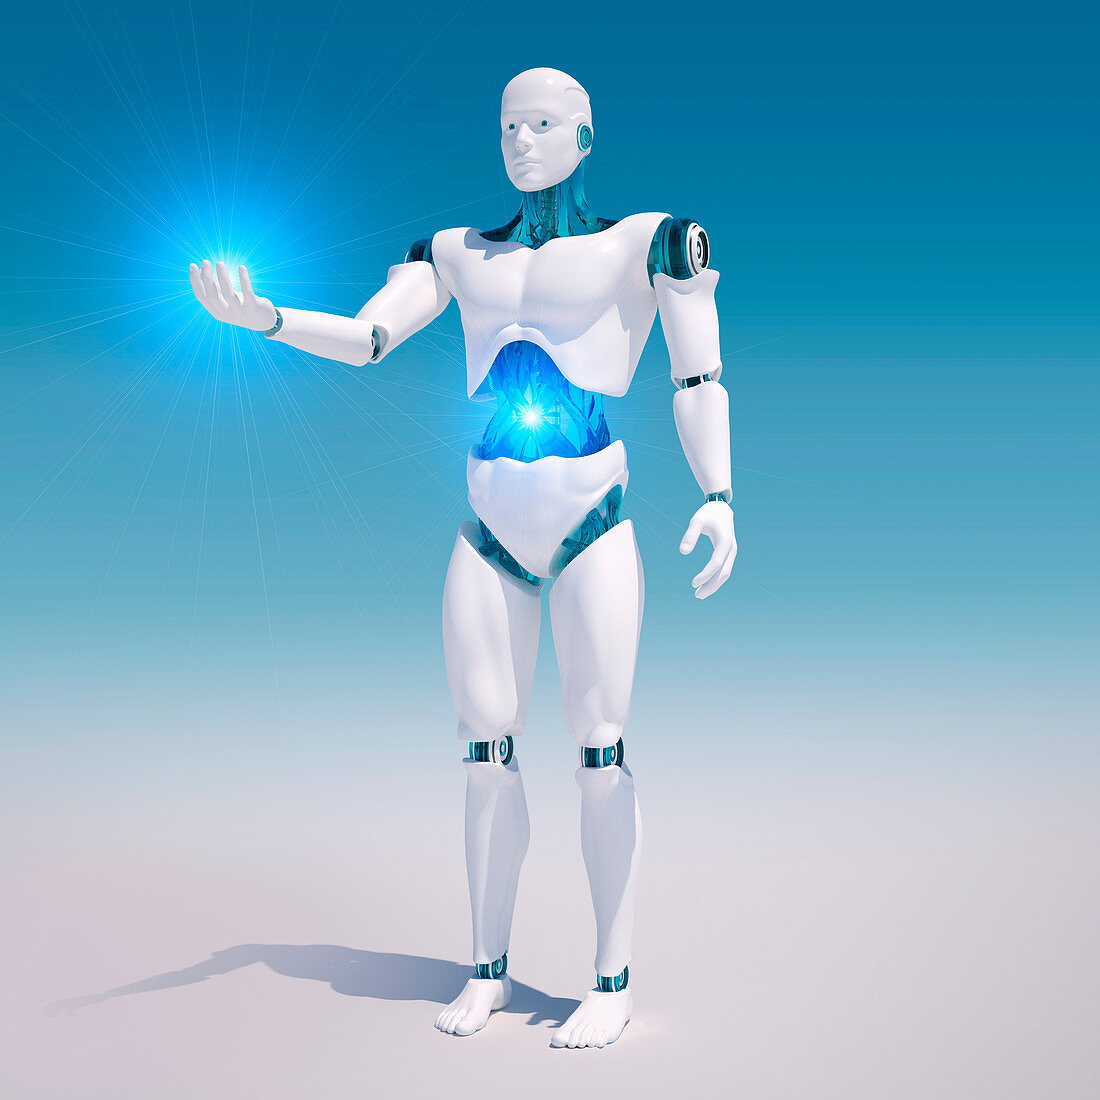 Android holding light, illustration